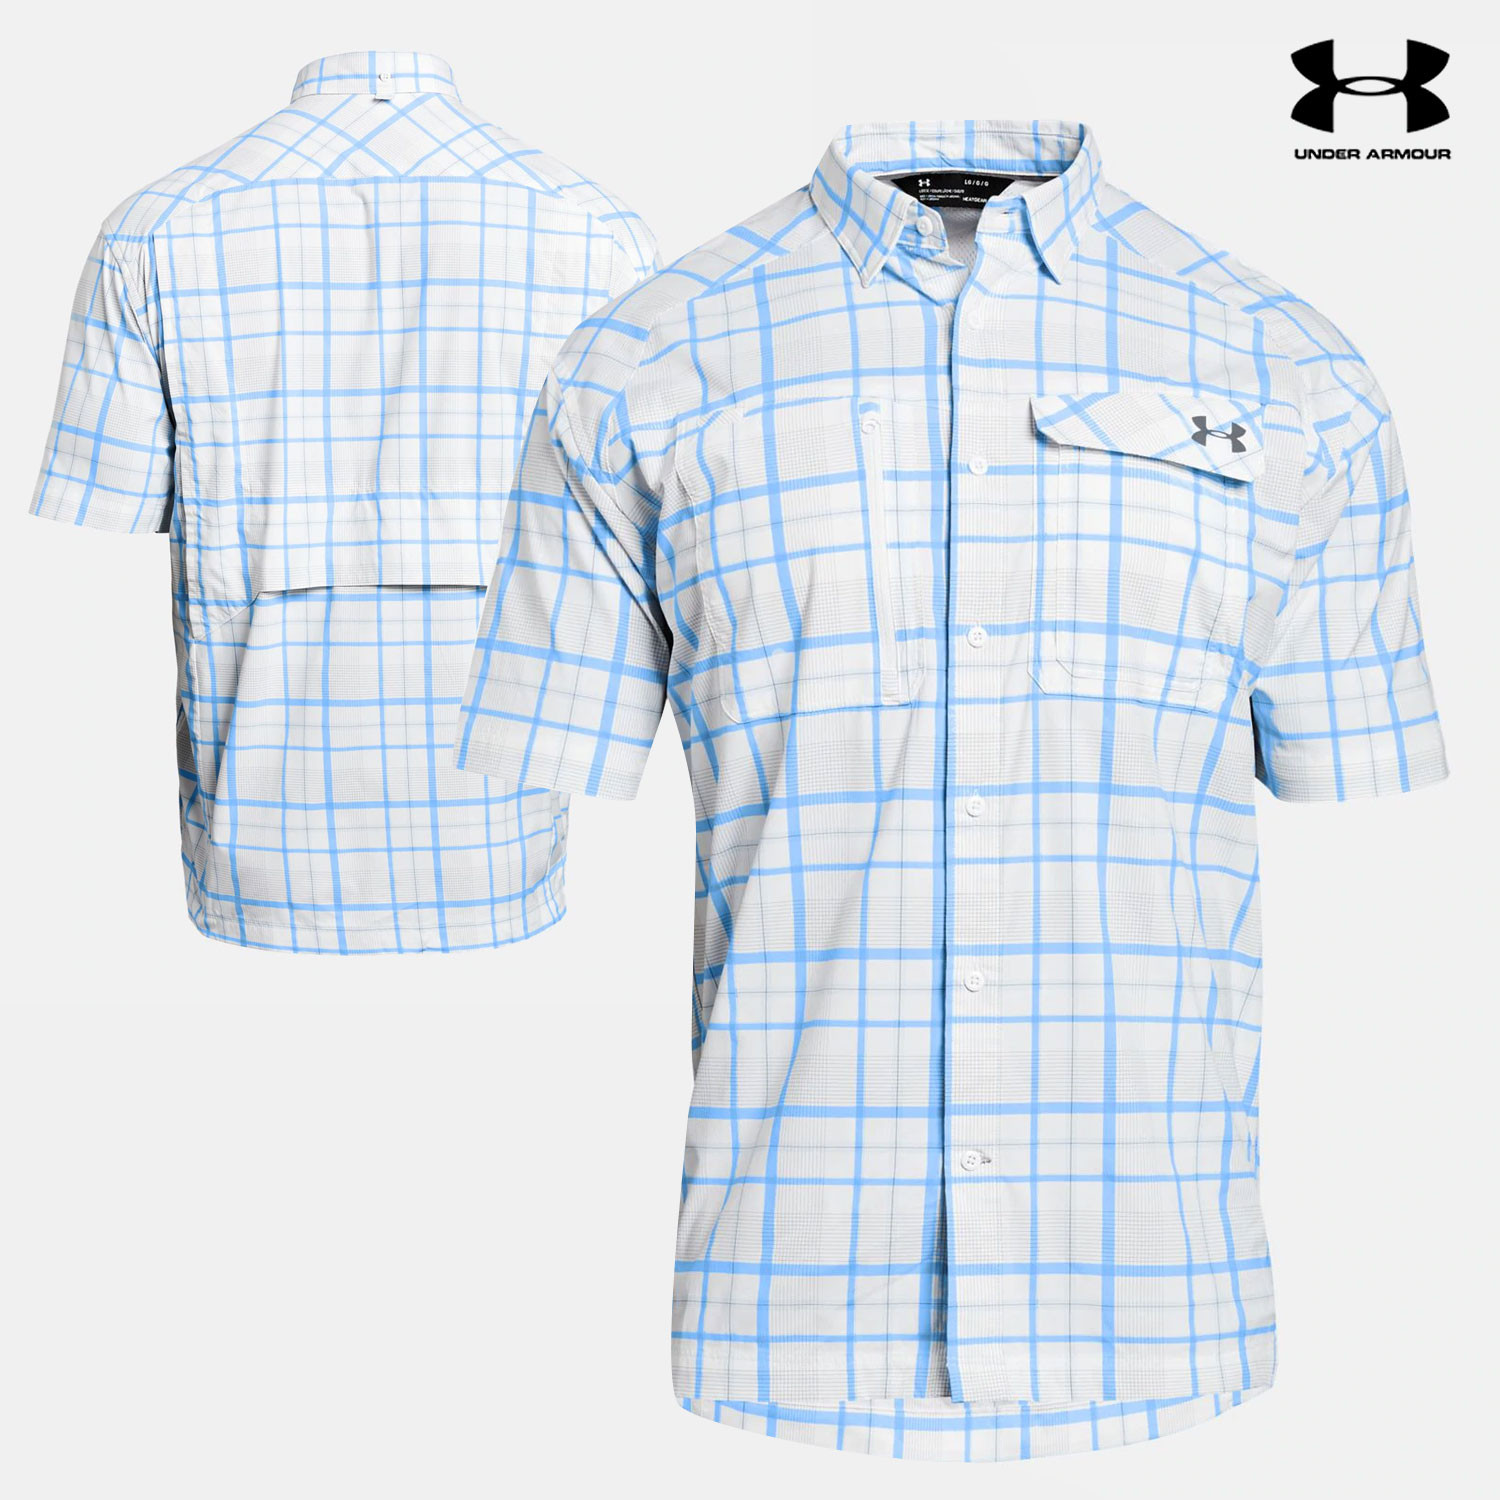 Under Armour Fish Hunter S/S Plaid Fishing Shirt (XL)- White/Carolina Blue